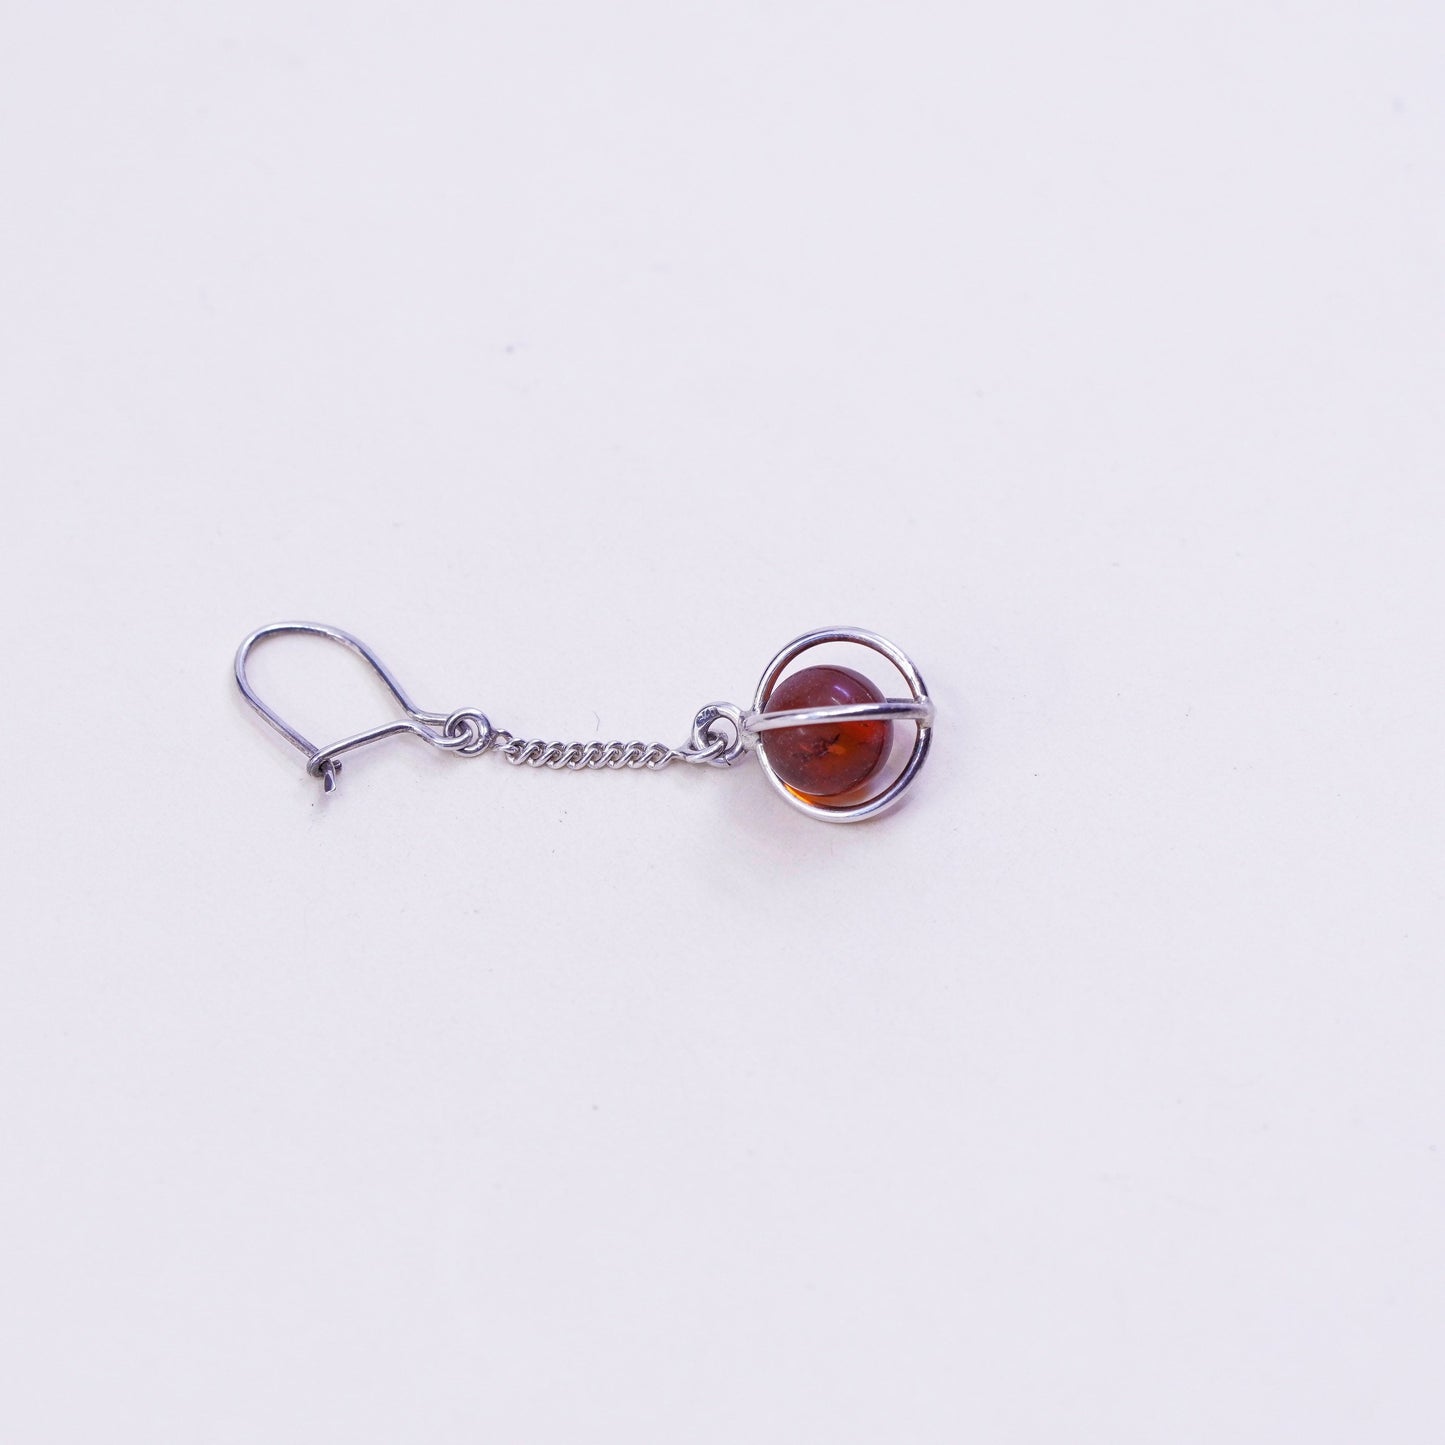 Vintage Sterling 925 silver handmade earrings with amber bead